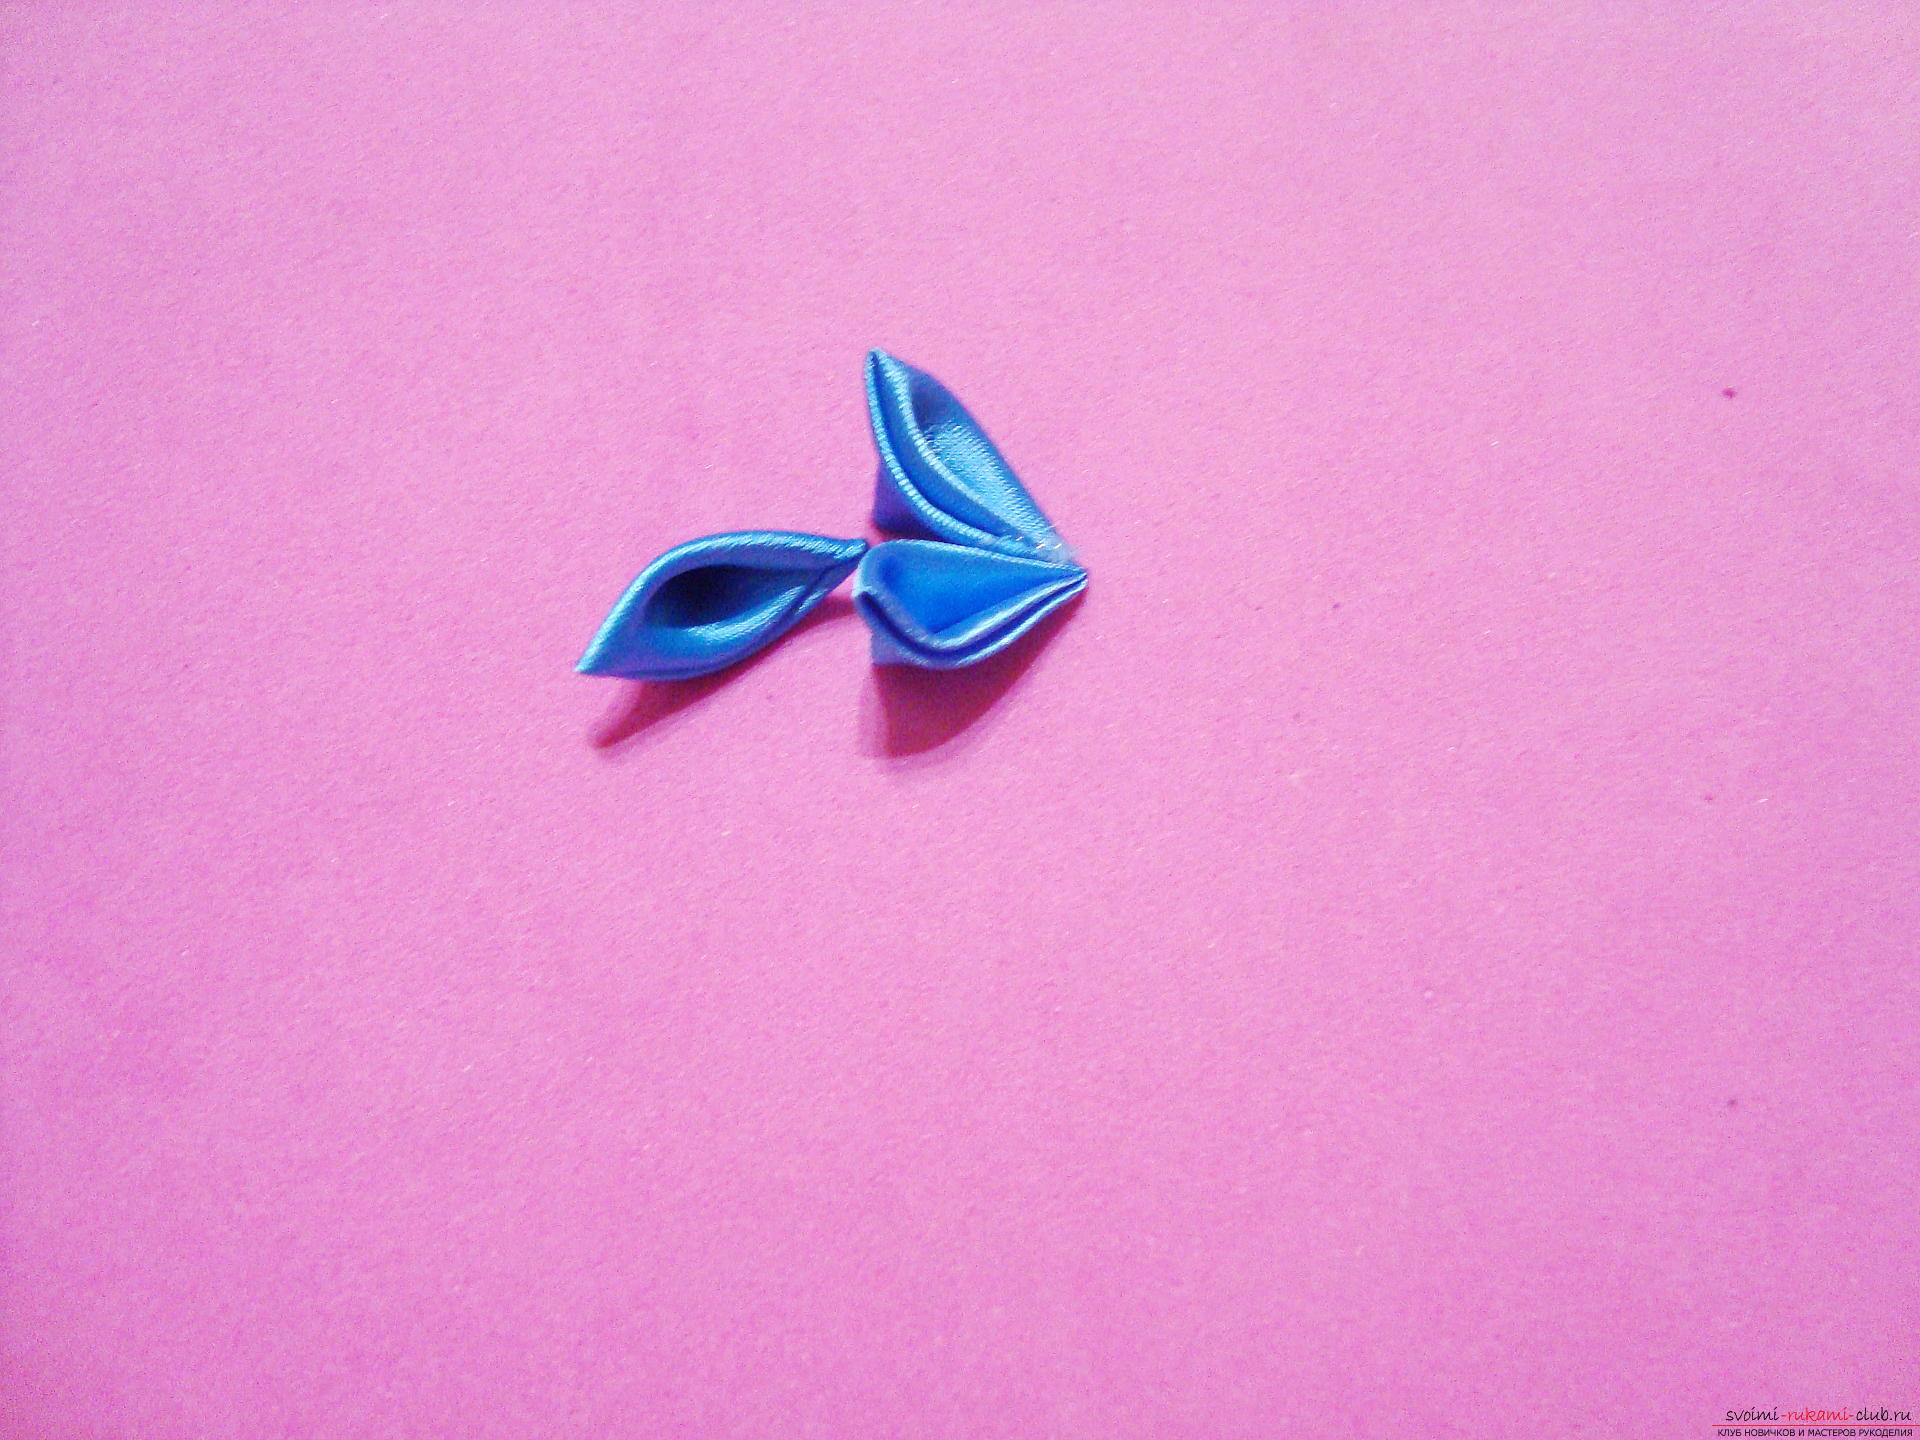 Фото инструкция по изготовлению заколки из лент голубого цвета в технике канзаши. Фото №12